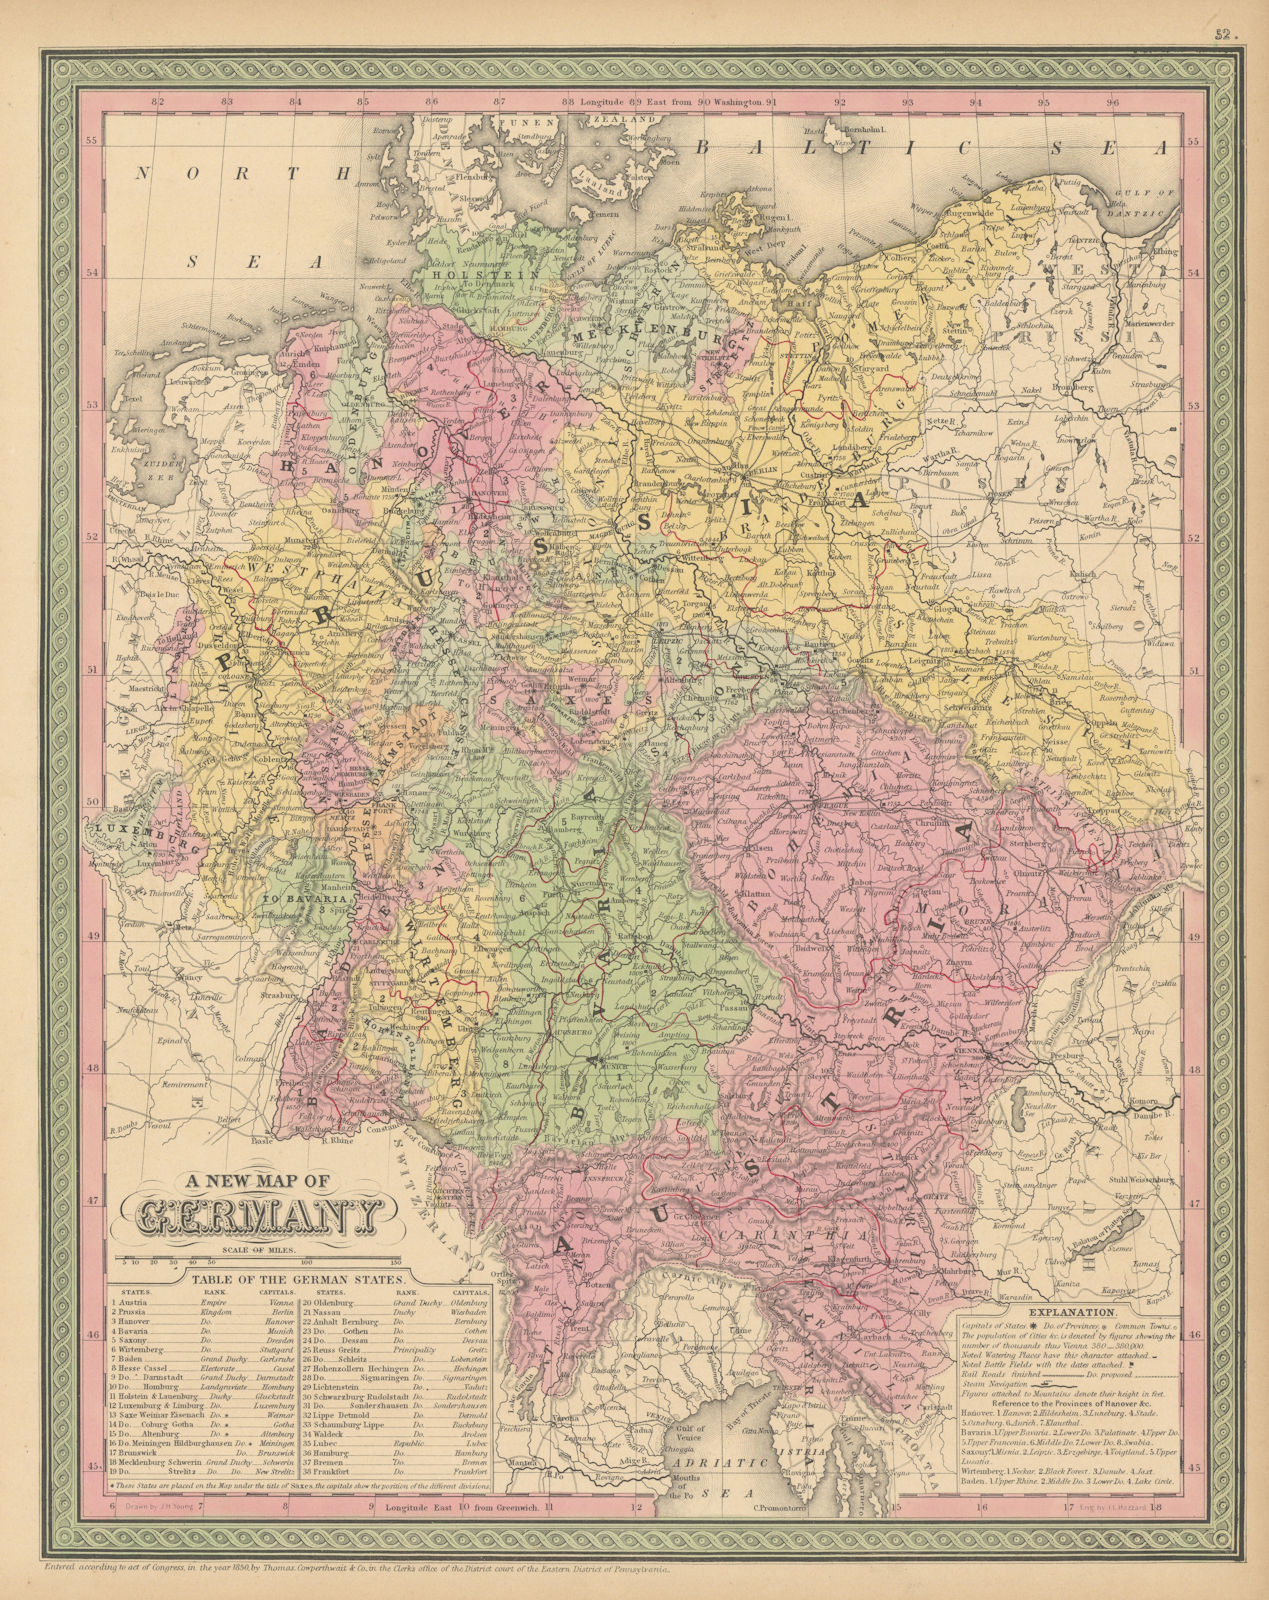 Associate Product A new map of Germany. Austria Bohemia Moravia. THOMAS, COWPERTHWAIT 1852